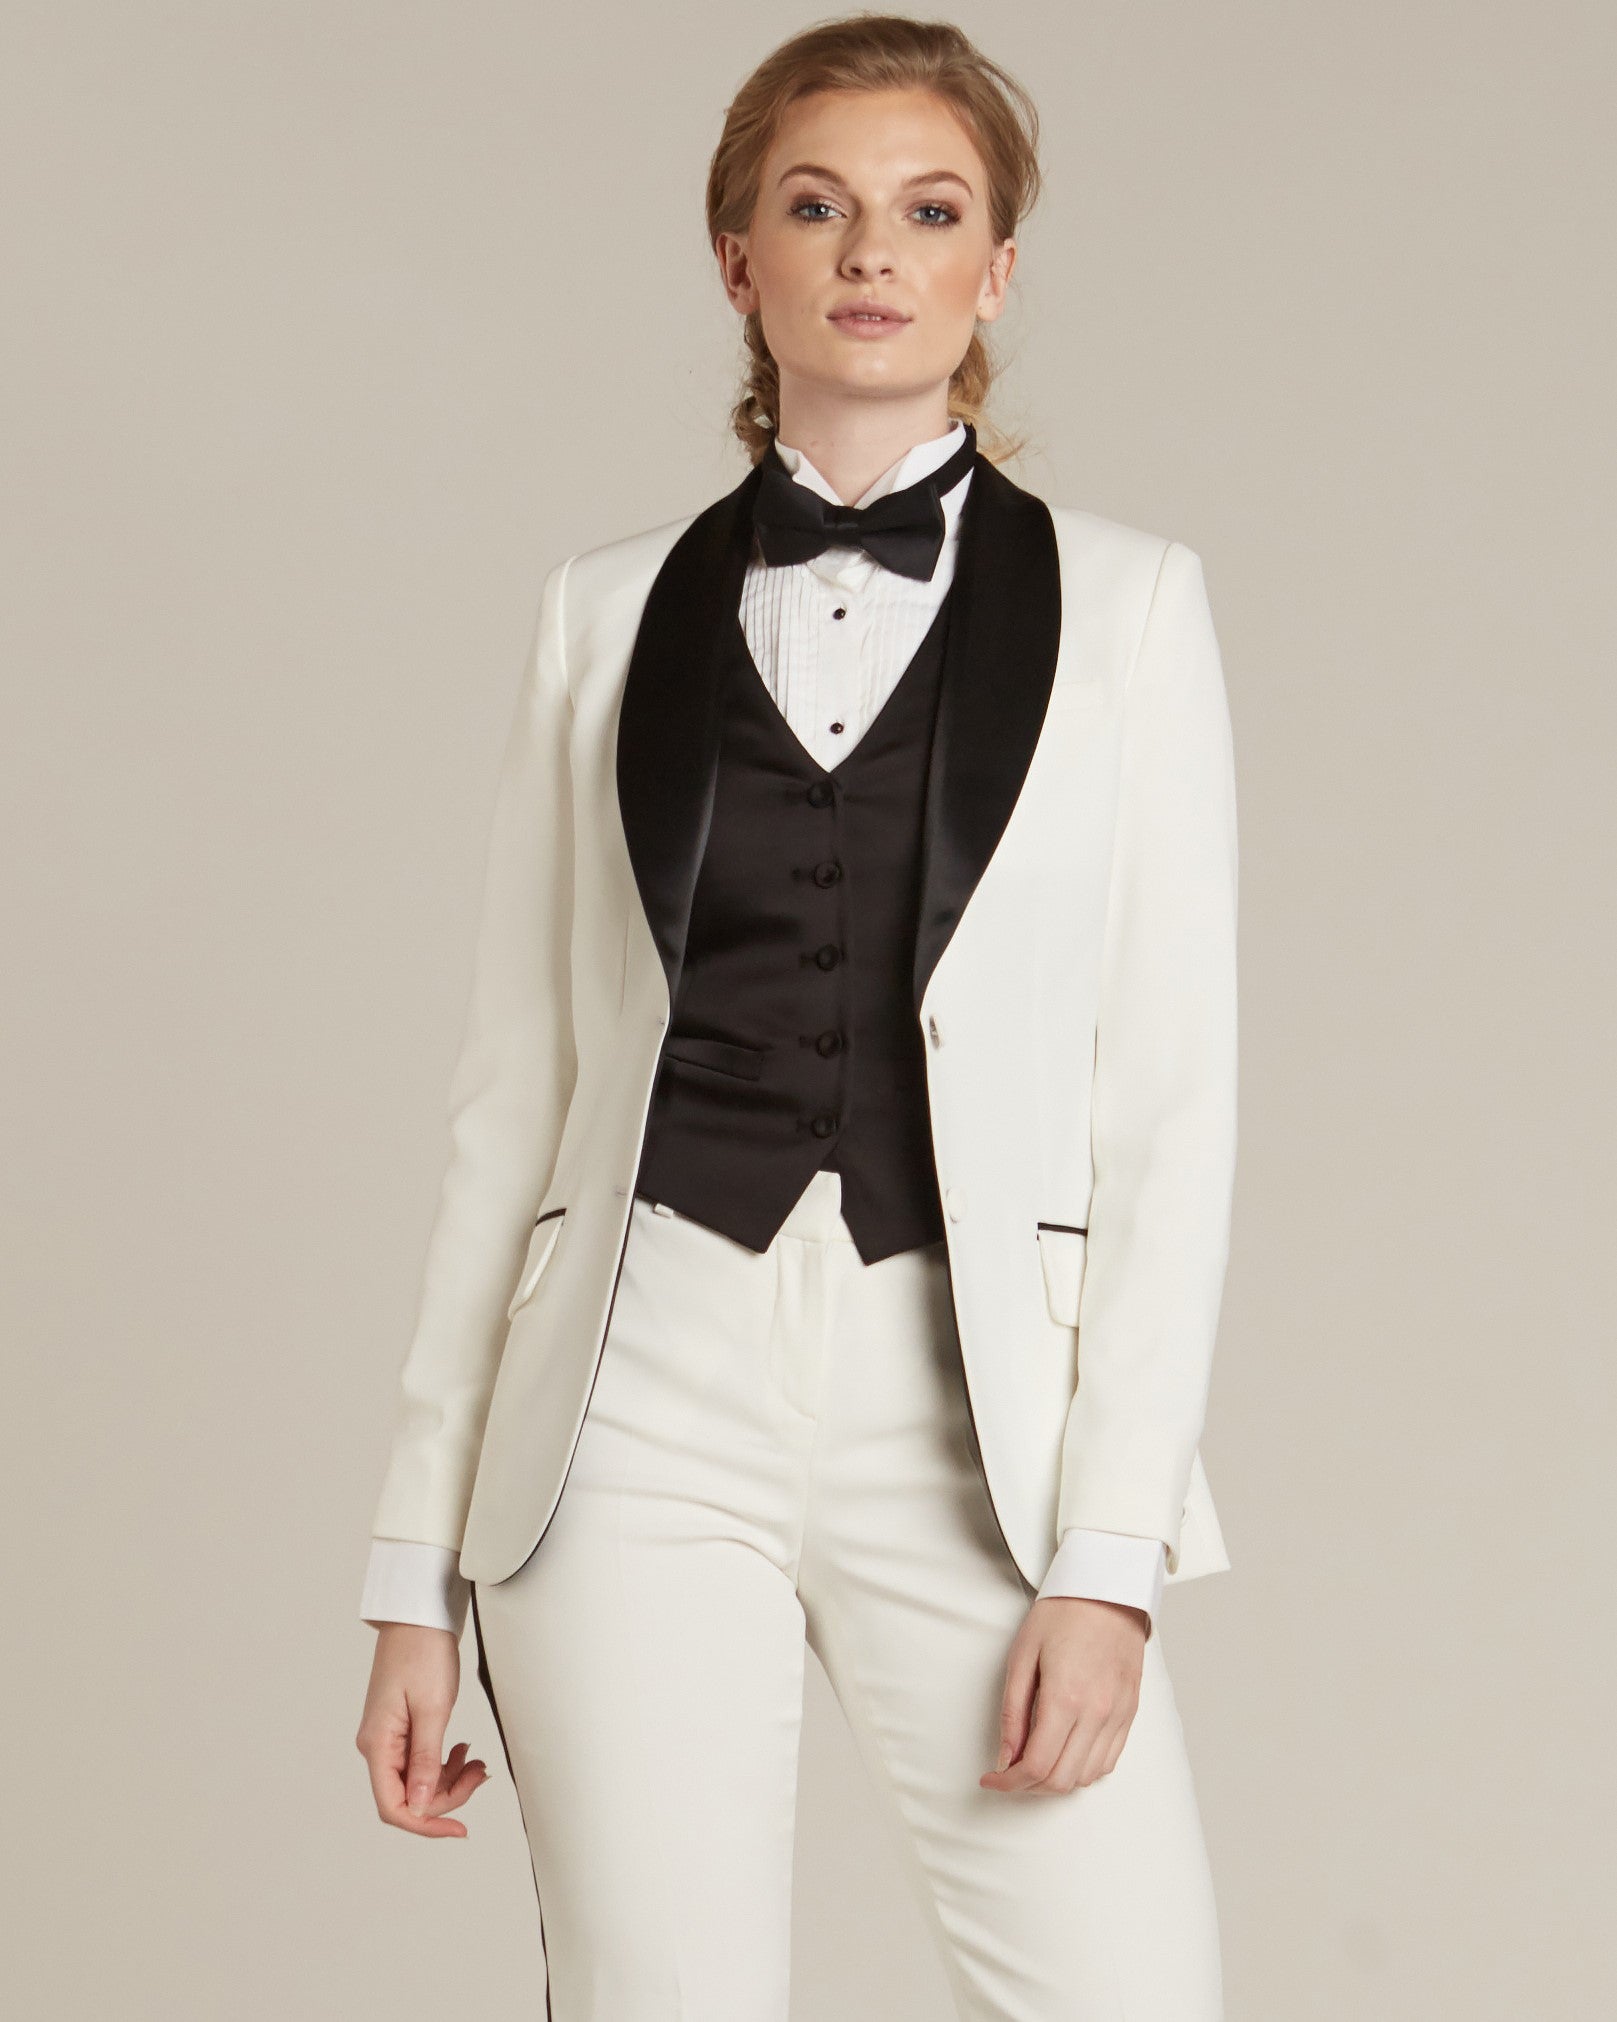 Pearl White & Black Shawl Collar Tuxedo Jacket